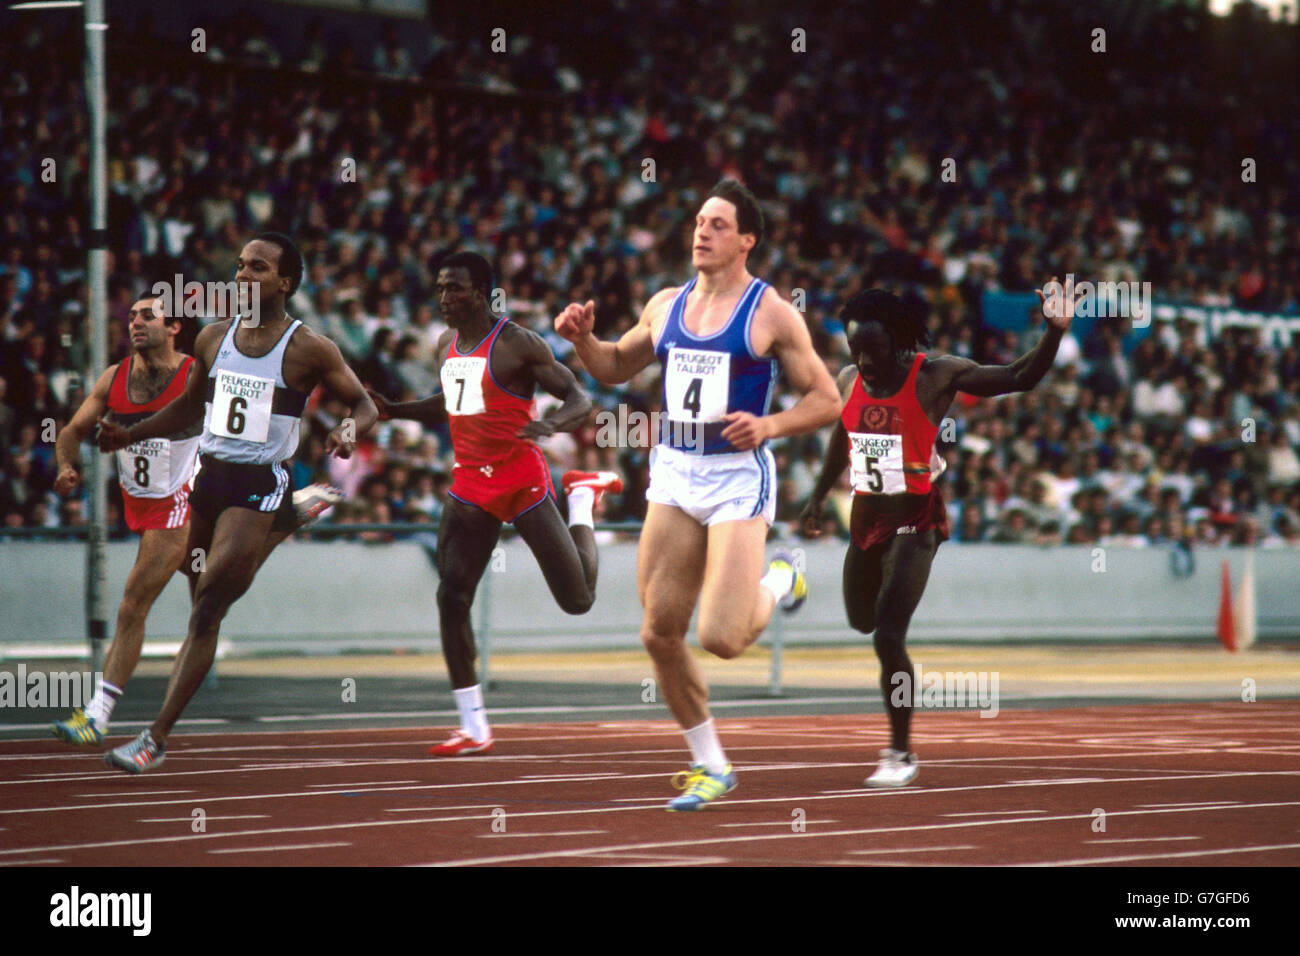 Athletics - Olympic Trials - Men's 100 metres Stock Photo